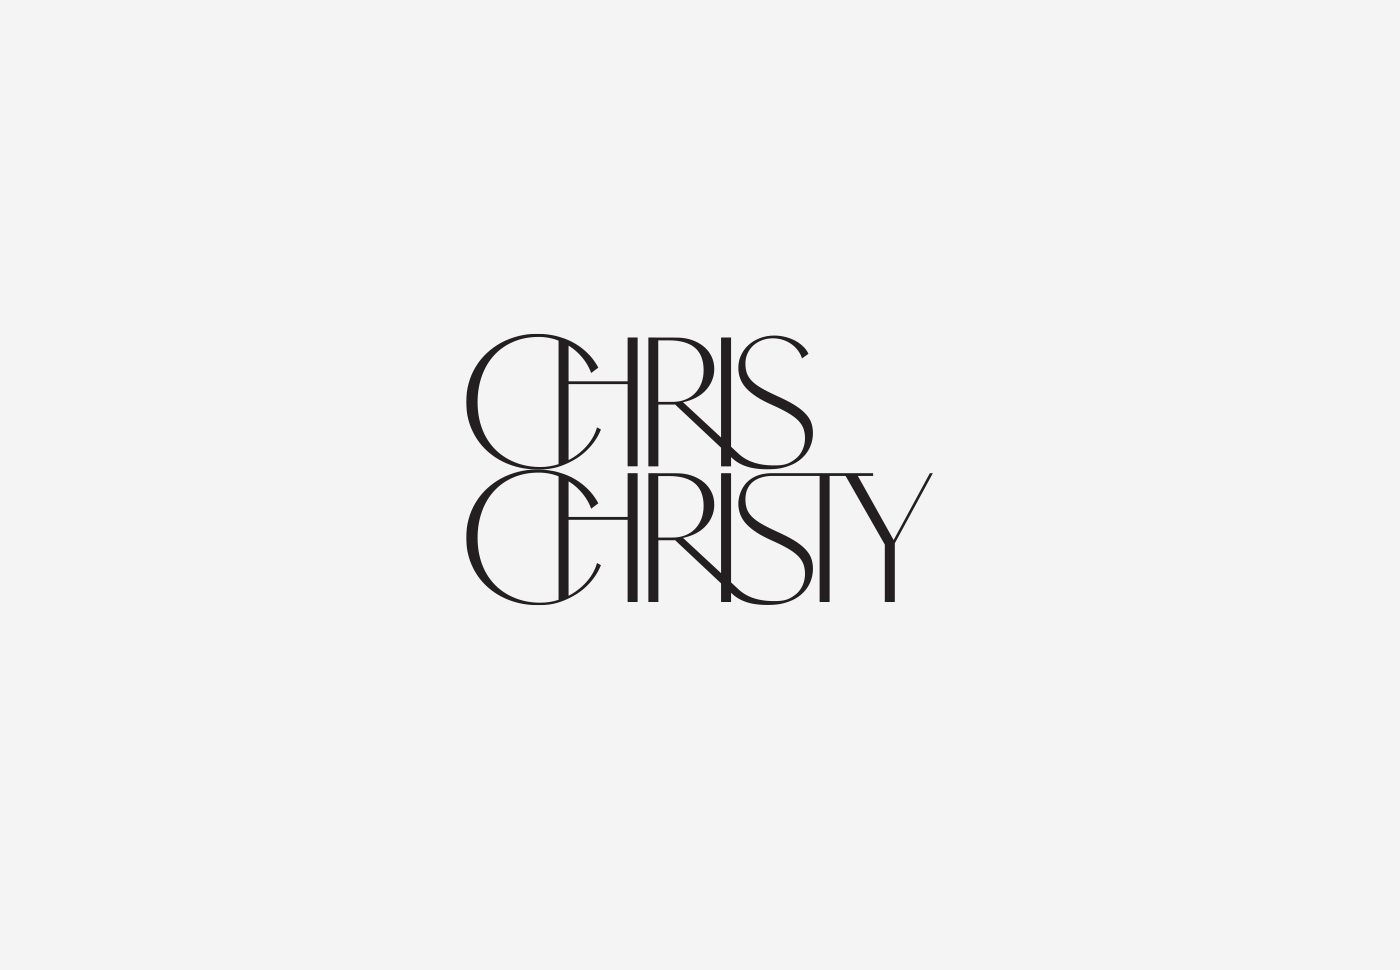 Chris Christy – Visual identity